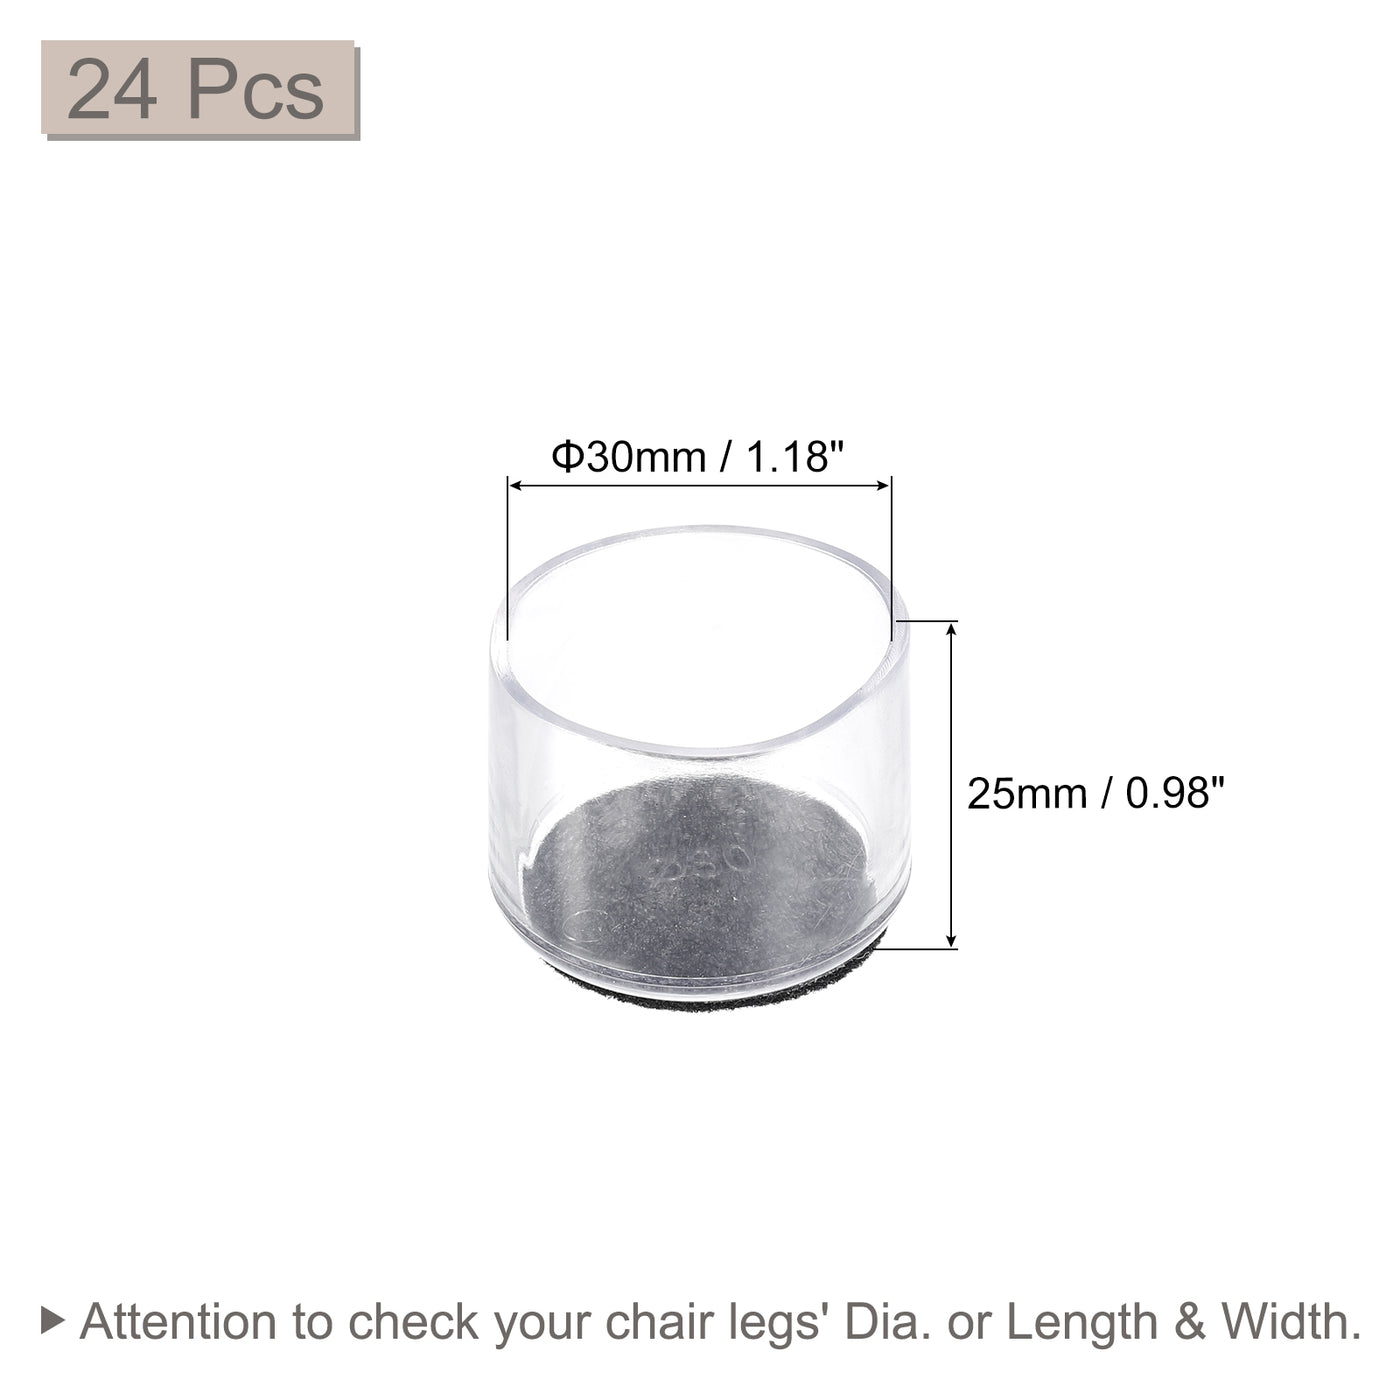 uxcell Uxcell Chair Leg Floor Protectors, 24Pcs 30mm(1.18") PVC & Felt Chair Leg Cover Caps for Hardwood Floors (Clear White)